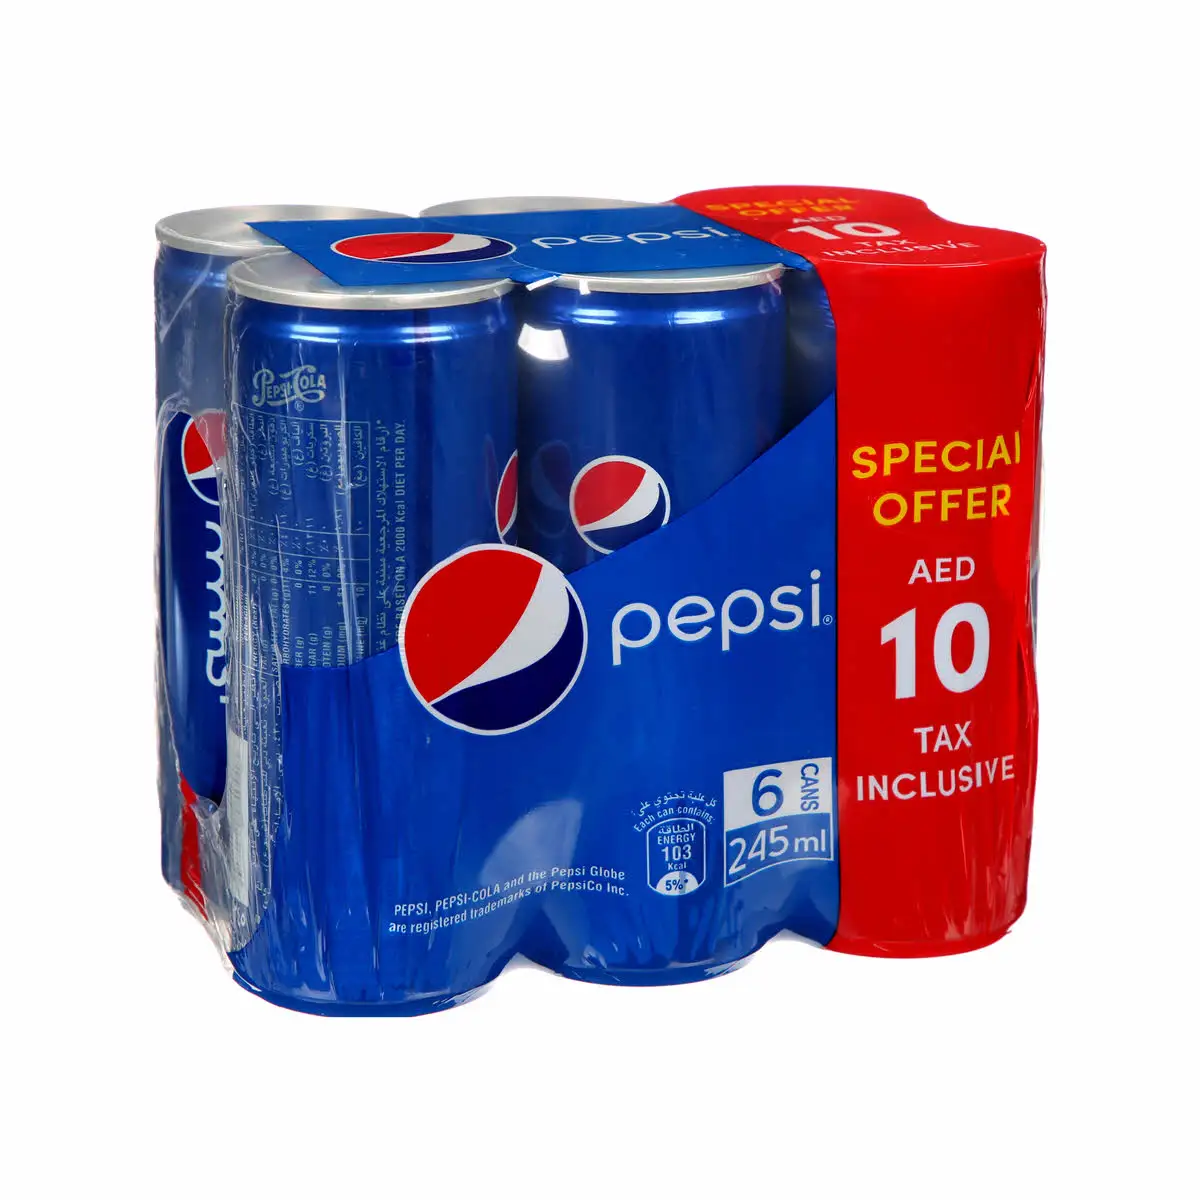 Alle Smaak Pepsi, 7up, Bergdauw, Evervess Gatorade Frisdrank